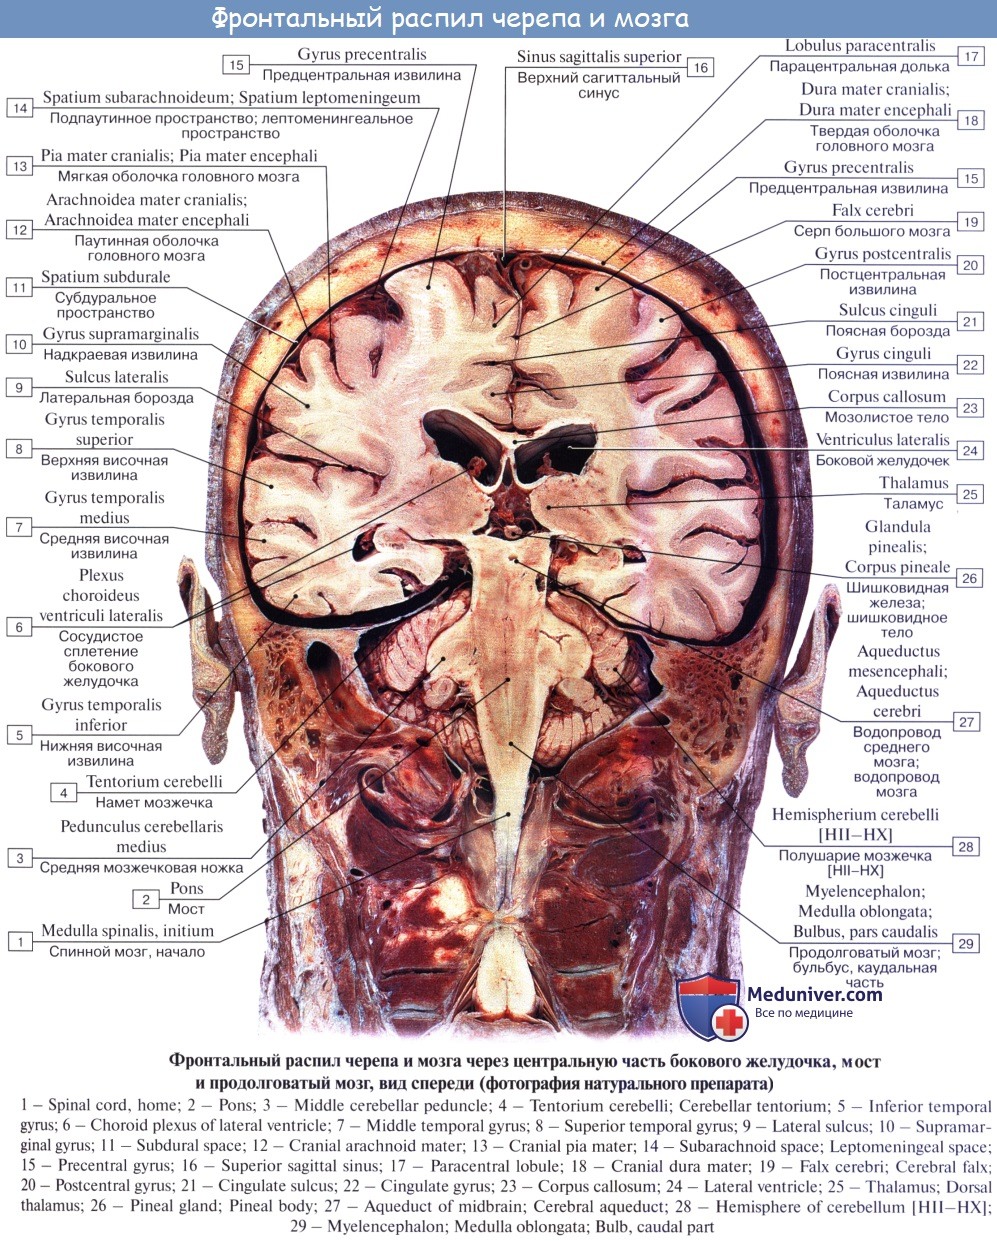 Отросток мозга 4. Намет мозжечка анатомия мрт. Артерии головного мозга кт анатомия. Анатомия головного мозга на мрт мозжечок. Отростки твердой мозговой оболочки головного мозга.